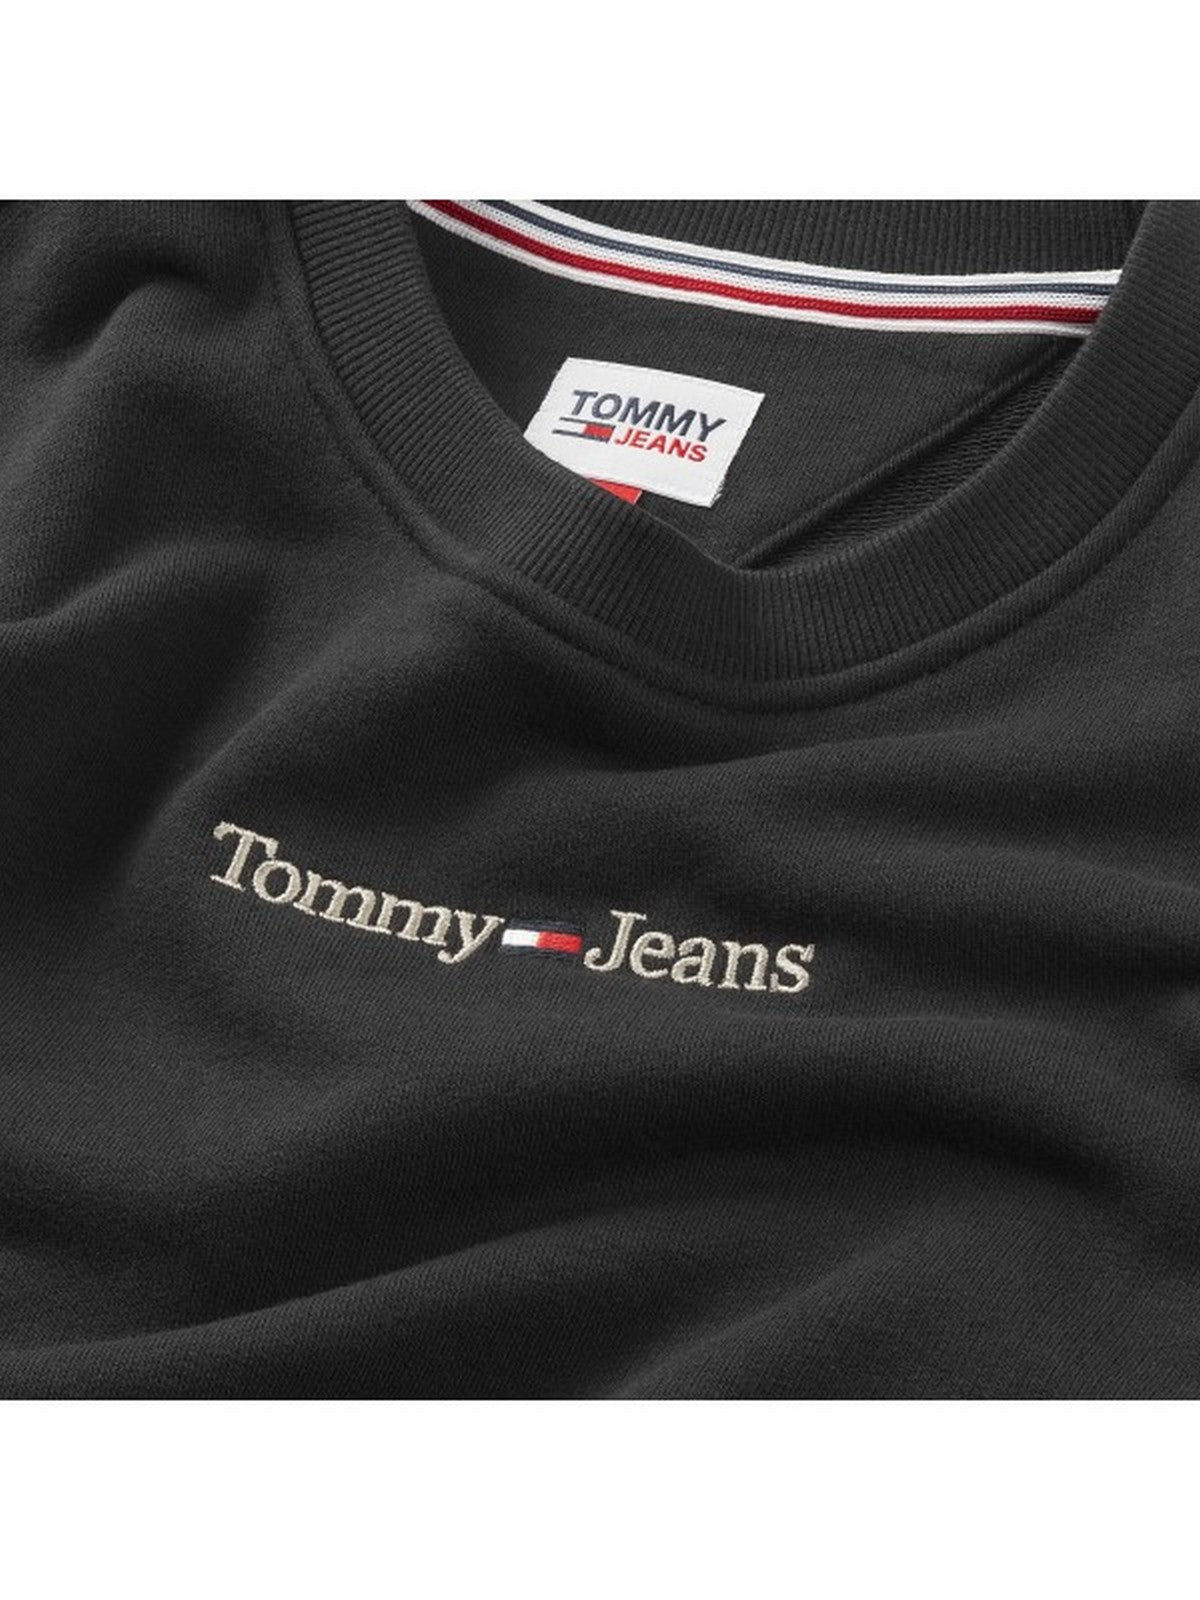 TOMMY HILFIGER Sweatshirt Femme DW0DW16931 BDS Noir